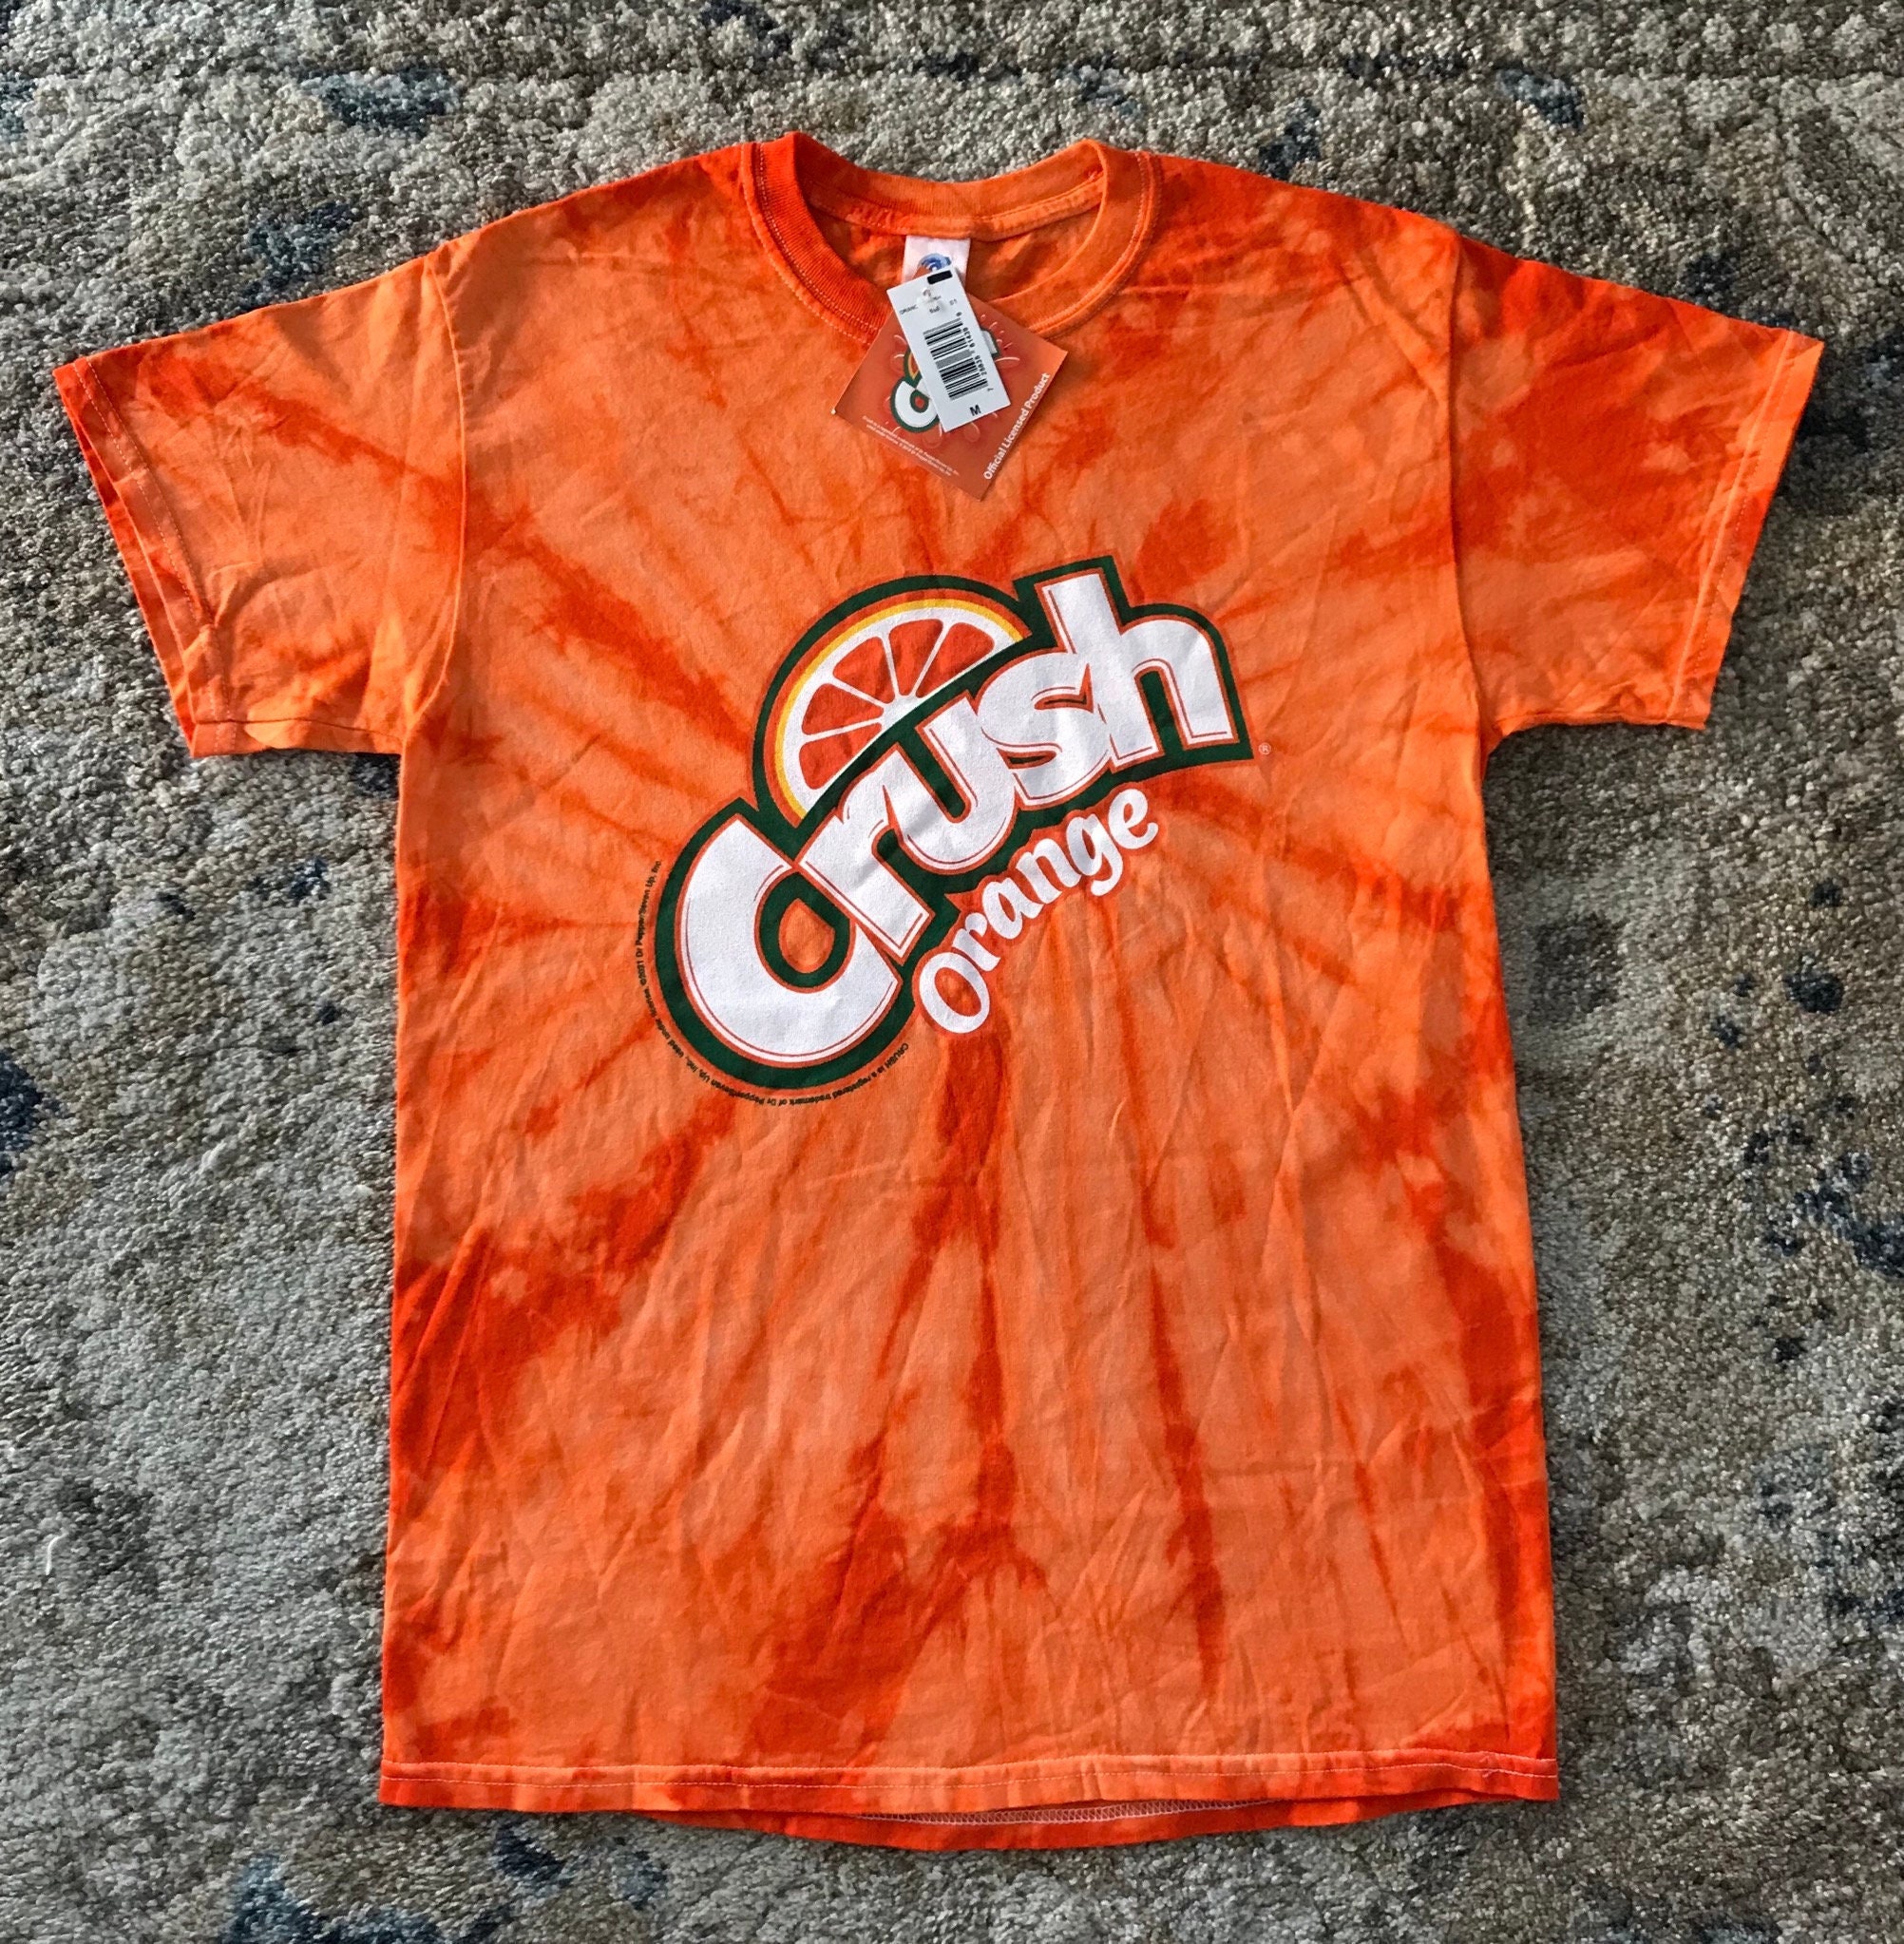 Crush Orange Soda Logo Crew Neck Short Sleeve Red Women's T-shirt-large :  Target